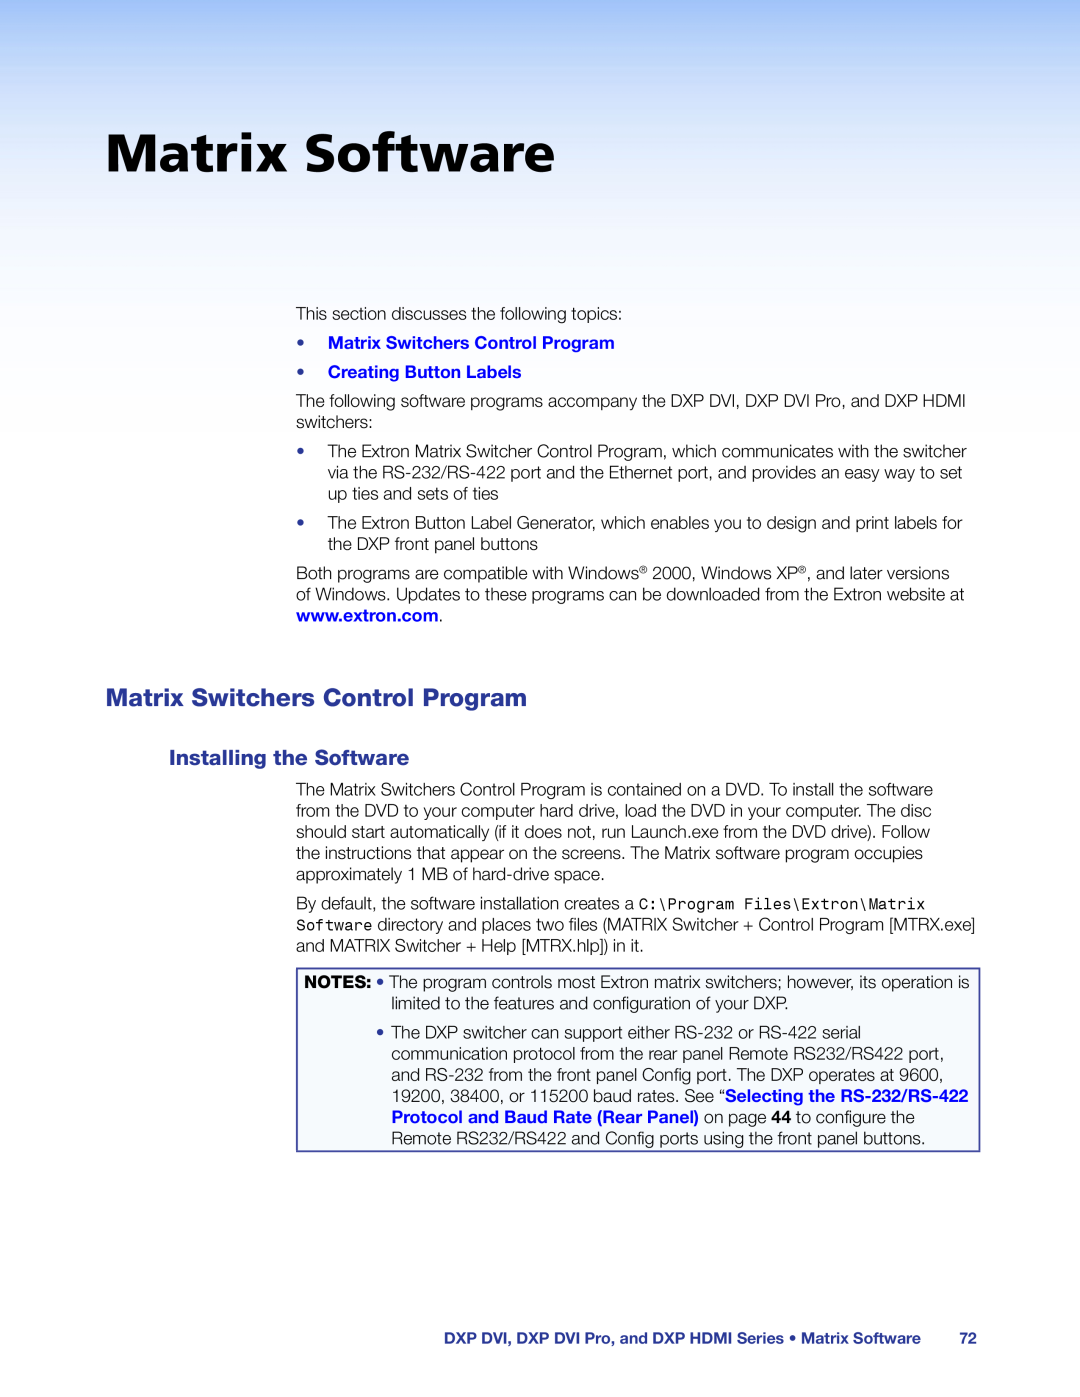 Extron electronic DXP DVI PRO manual Matrix Software, Matrix Switchers Control Program, Installing the Software 